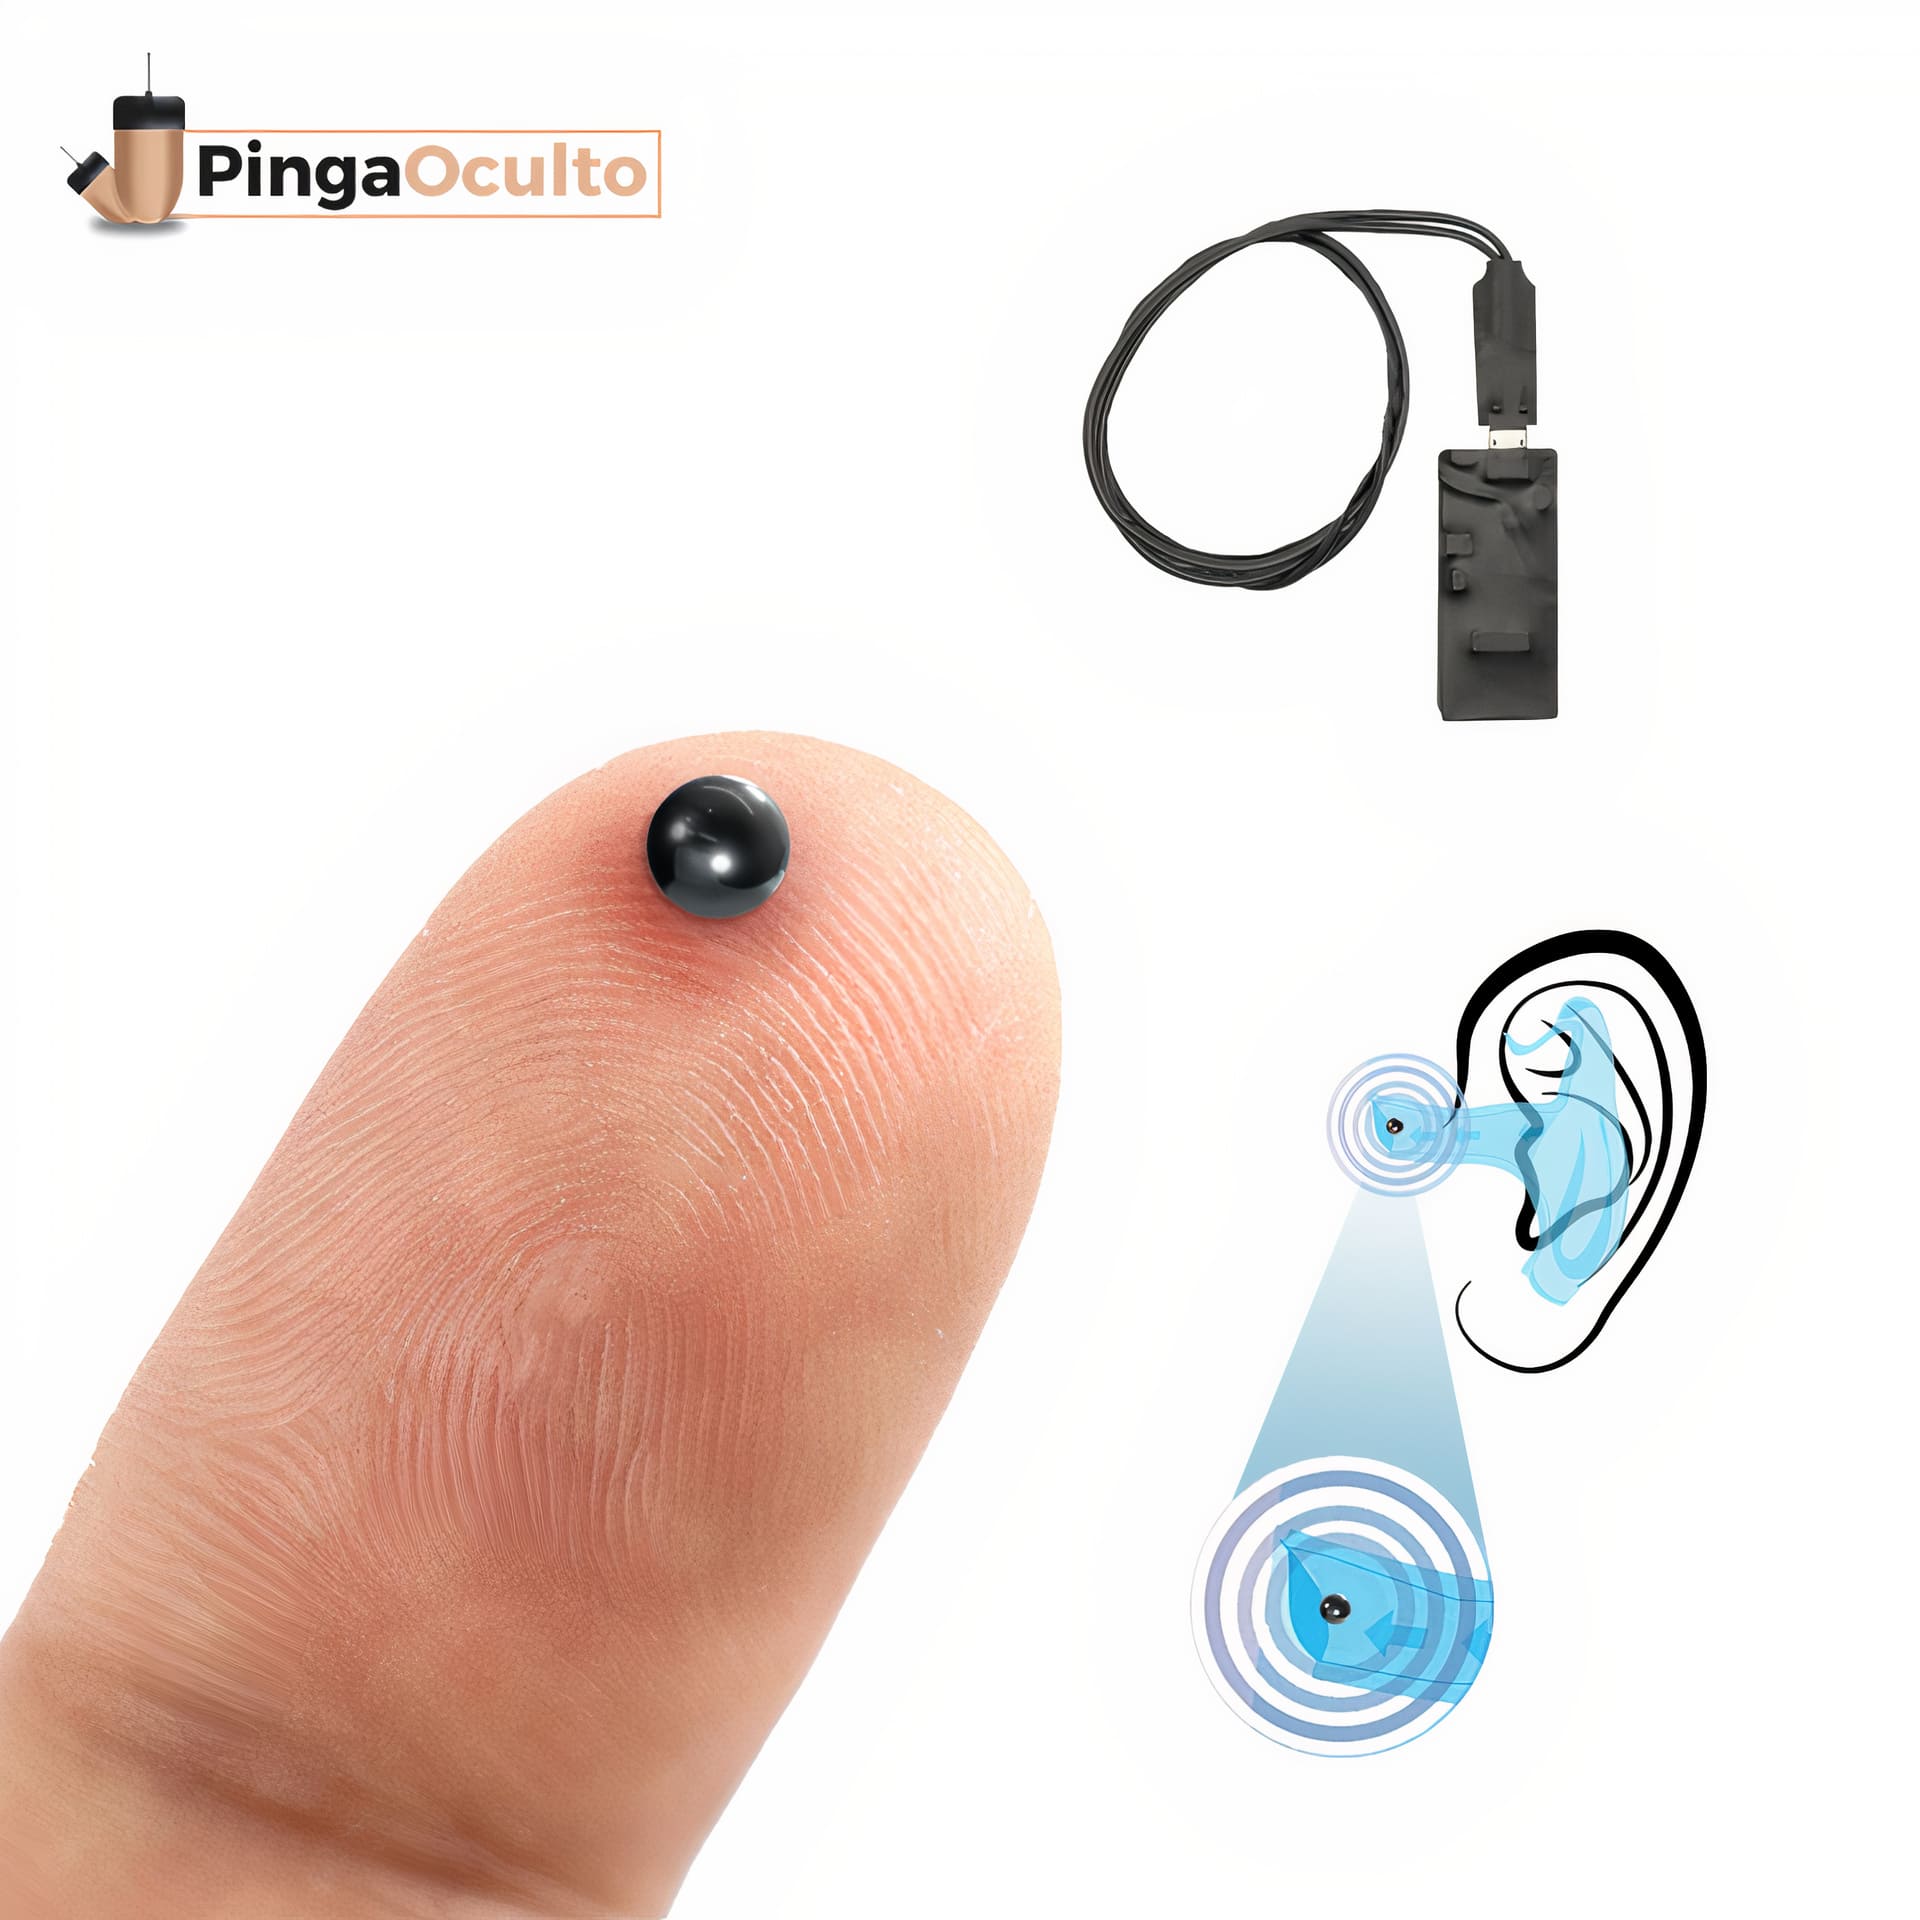 Pinganillo Vip Pro Ultramini Bluetooth